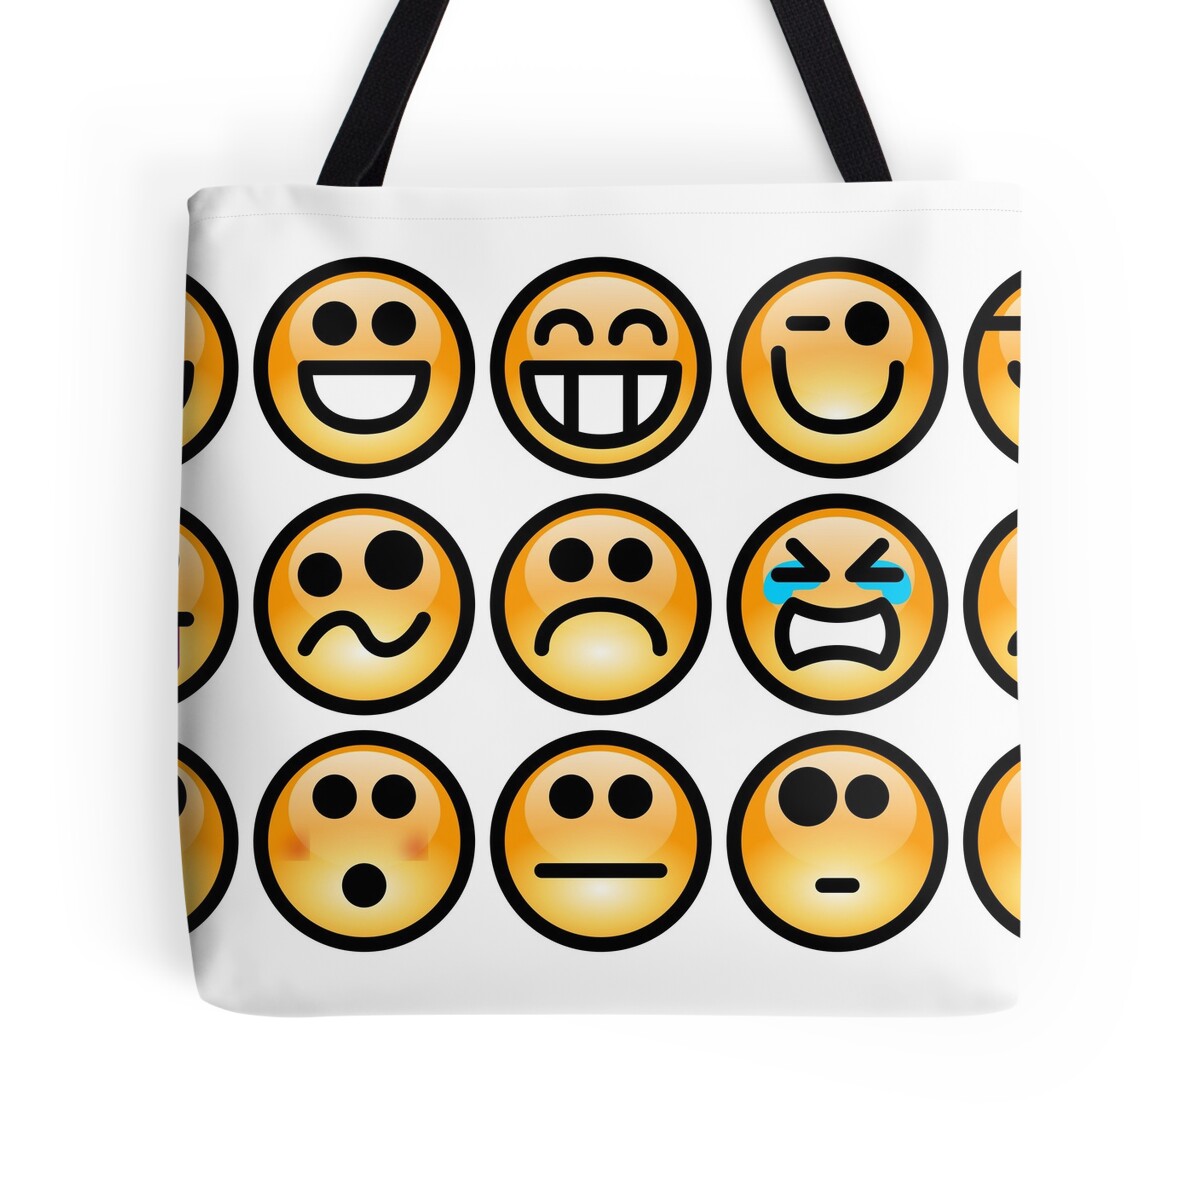 Emoji Emoticon Stickers By Edleon Redbubble